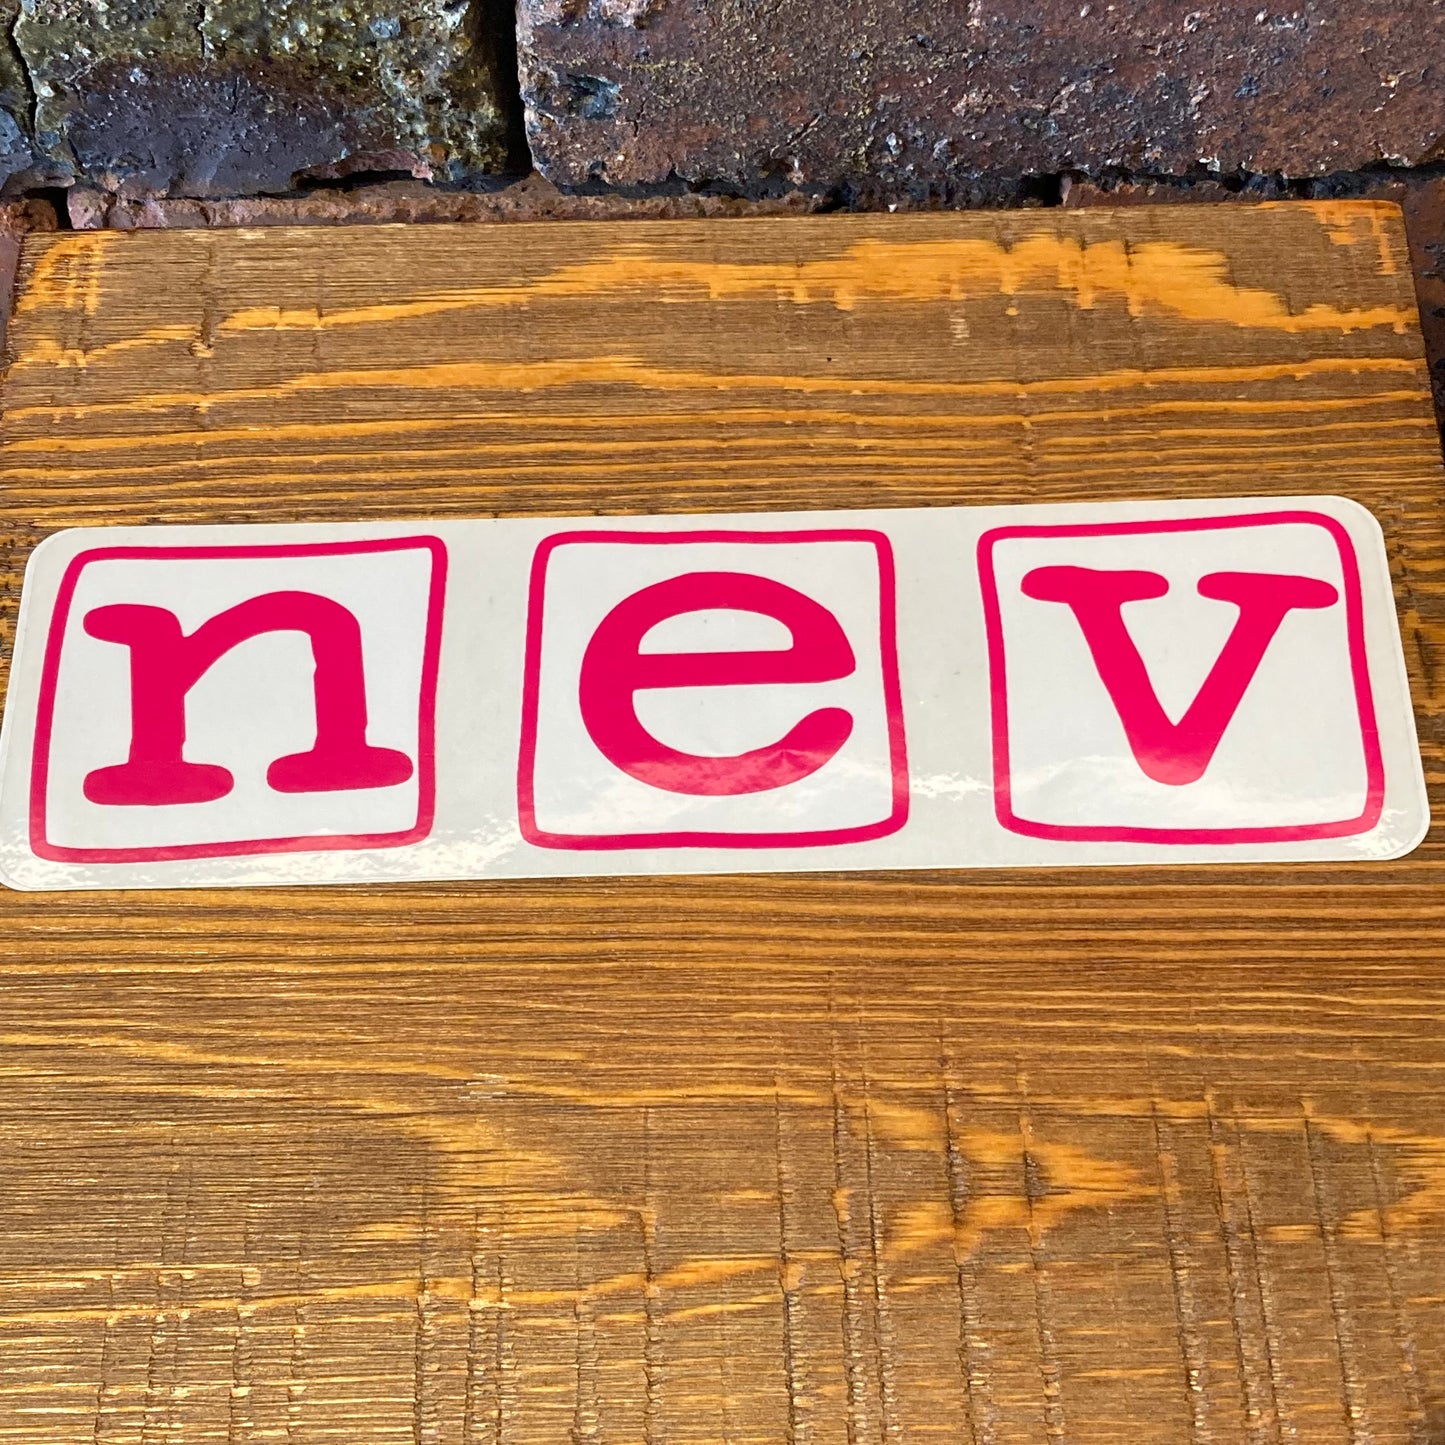 NEV sticker